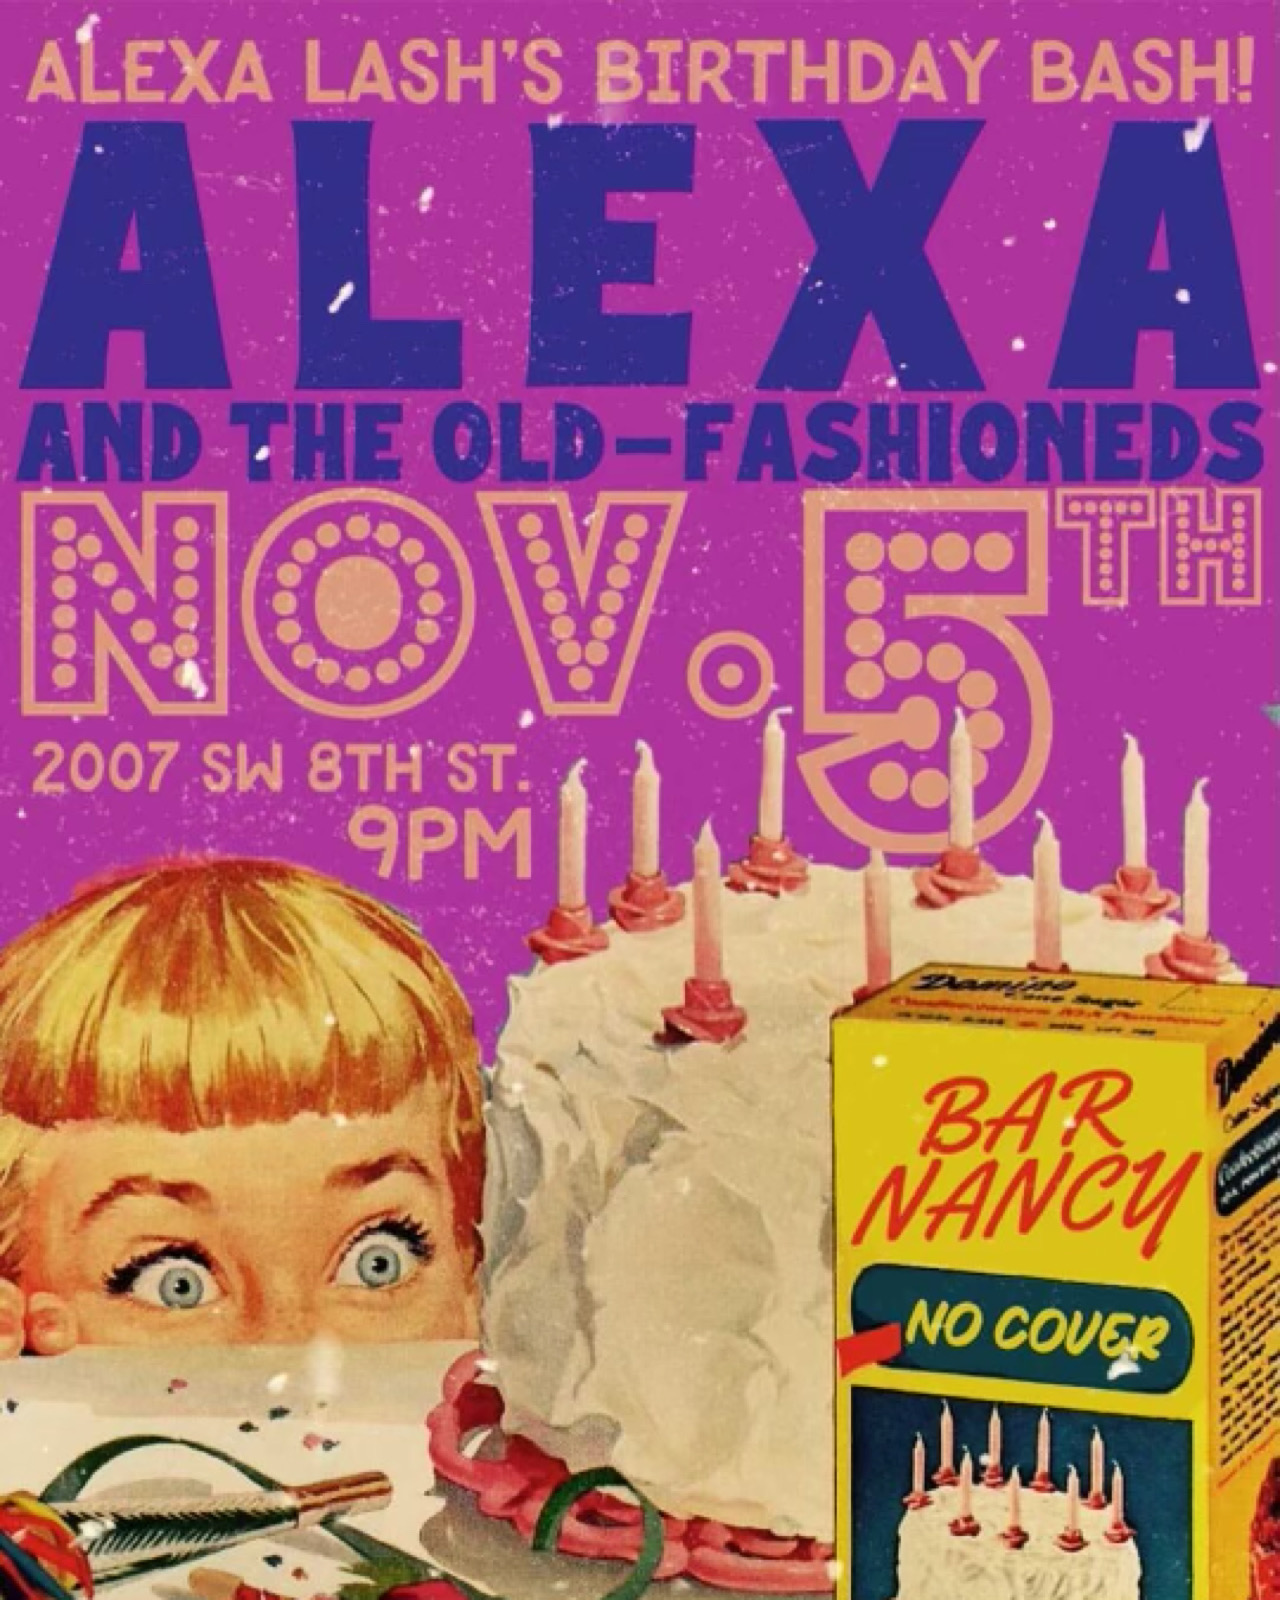 Alexa and the Old-Fashioneds - Alexa Birthday Bash at Bar Nancy - Nov 5th